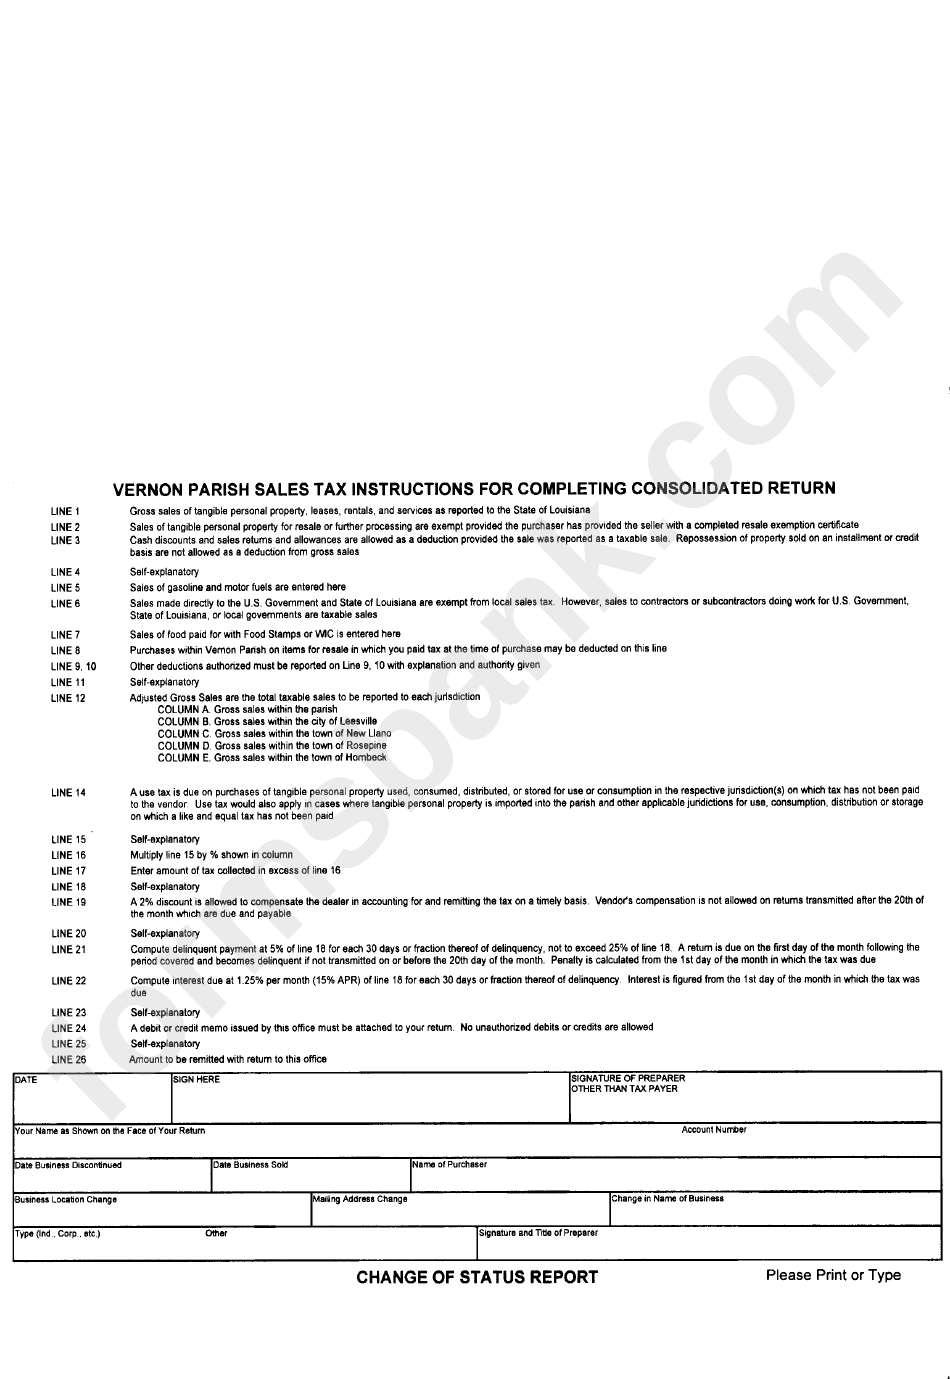 Sales And Use Tax Report Form - Vernon Parish Sales Tax Department - Louisiana